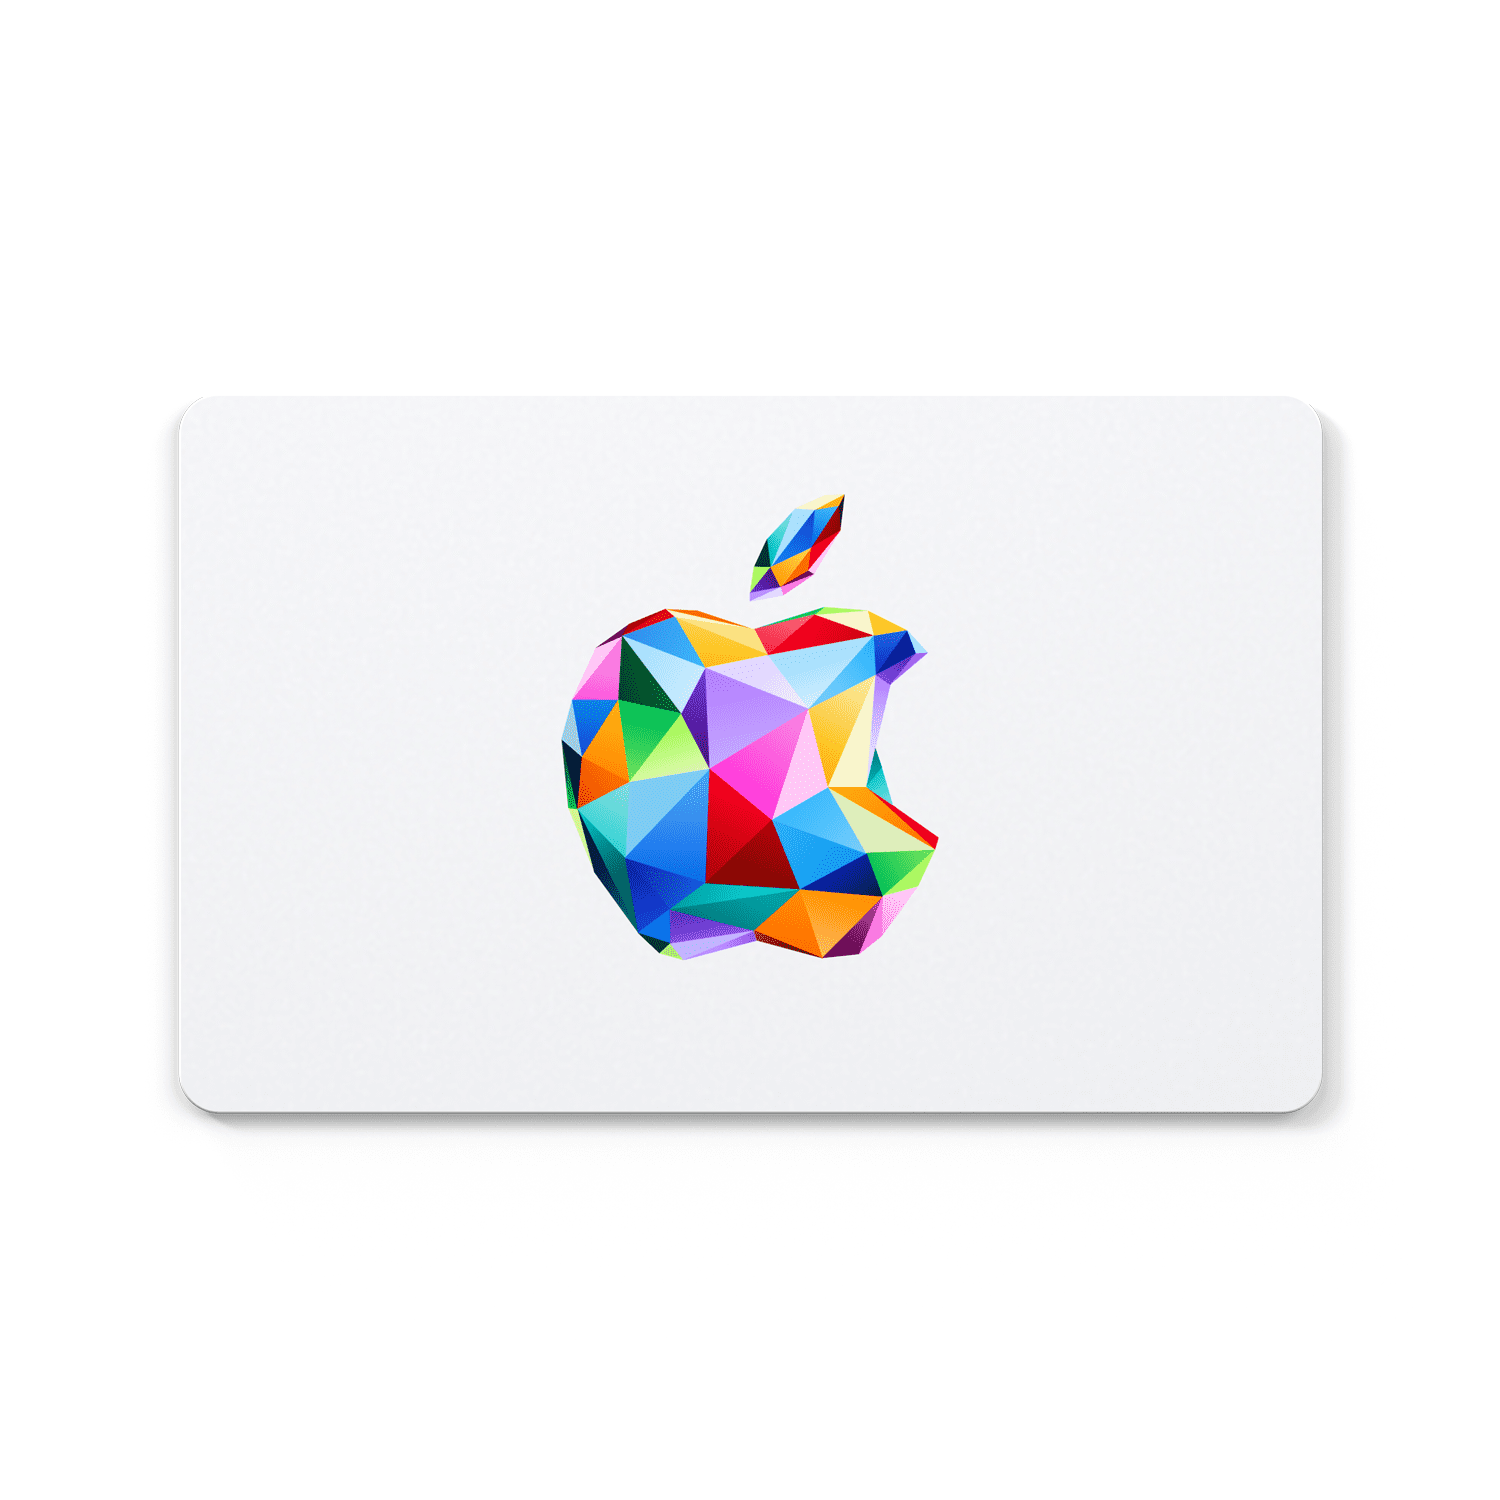 Gift card history - Apple Community